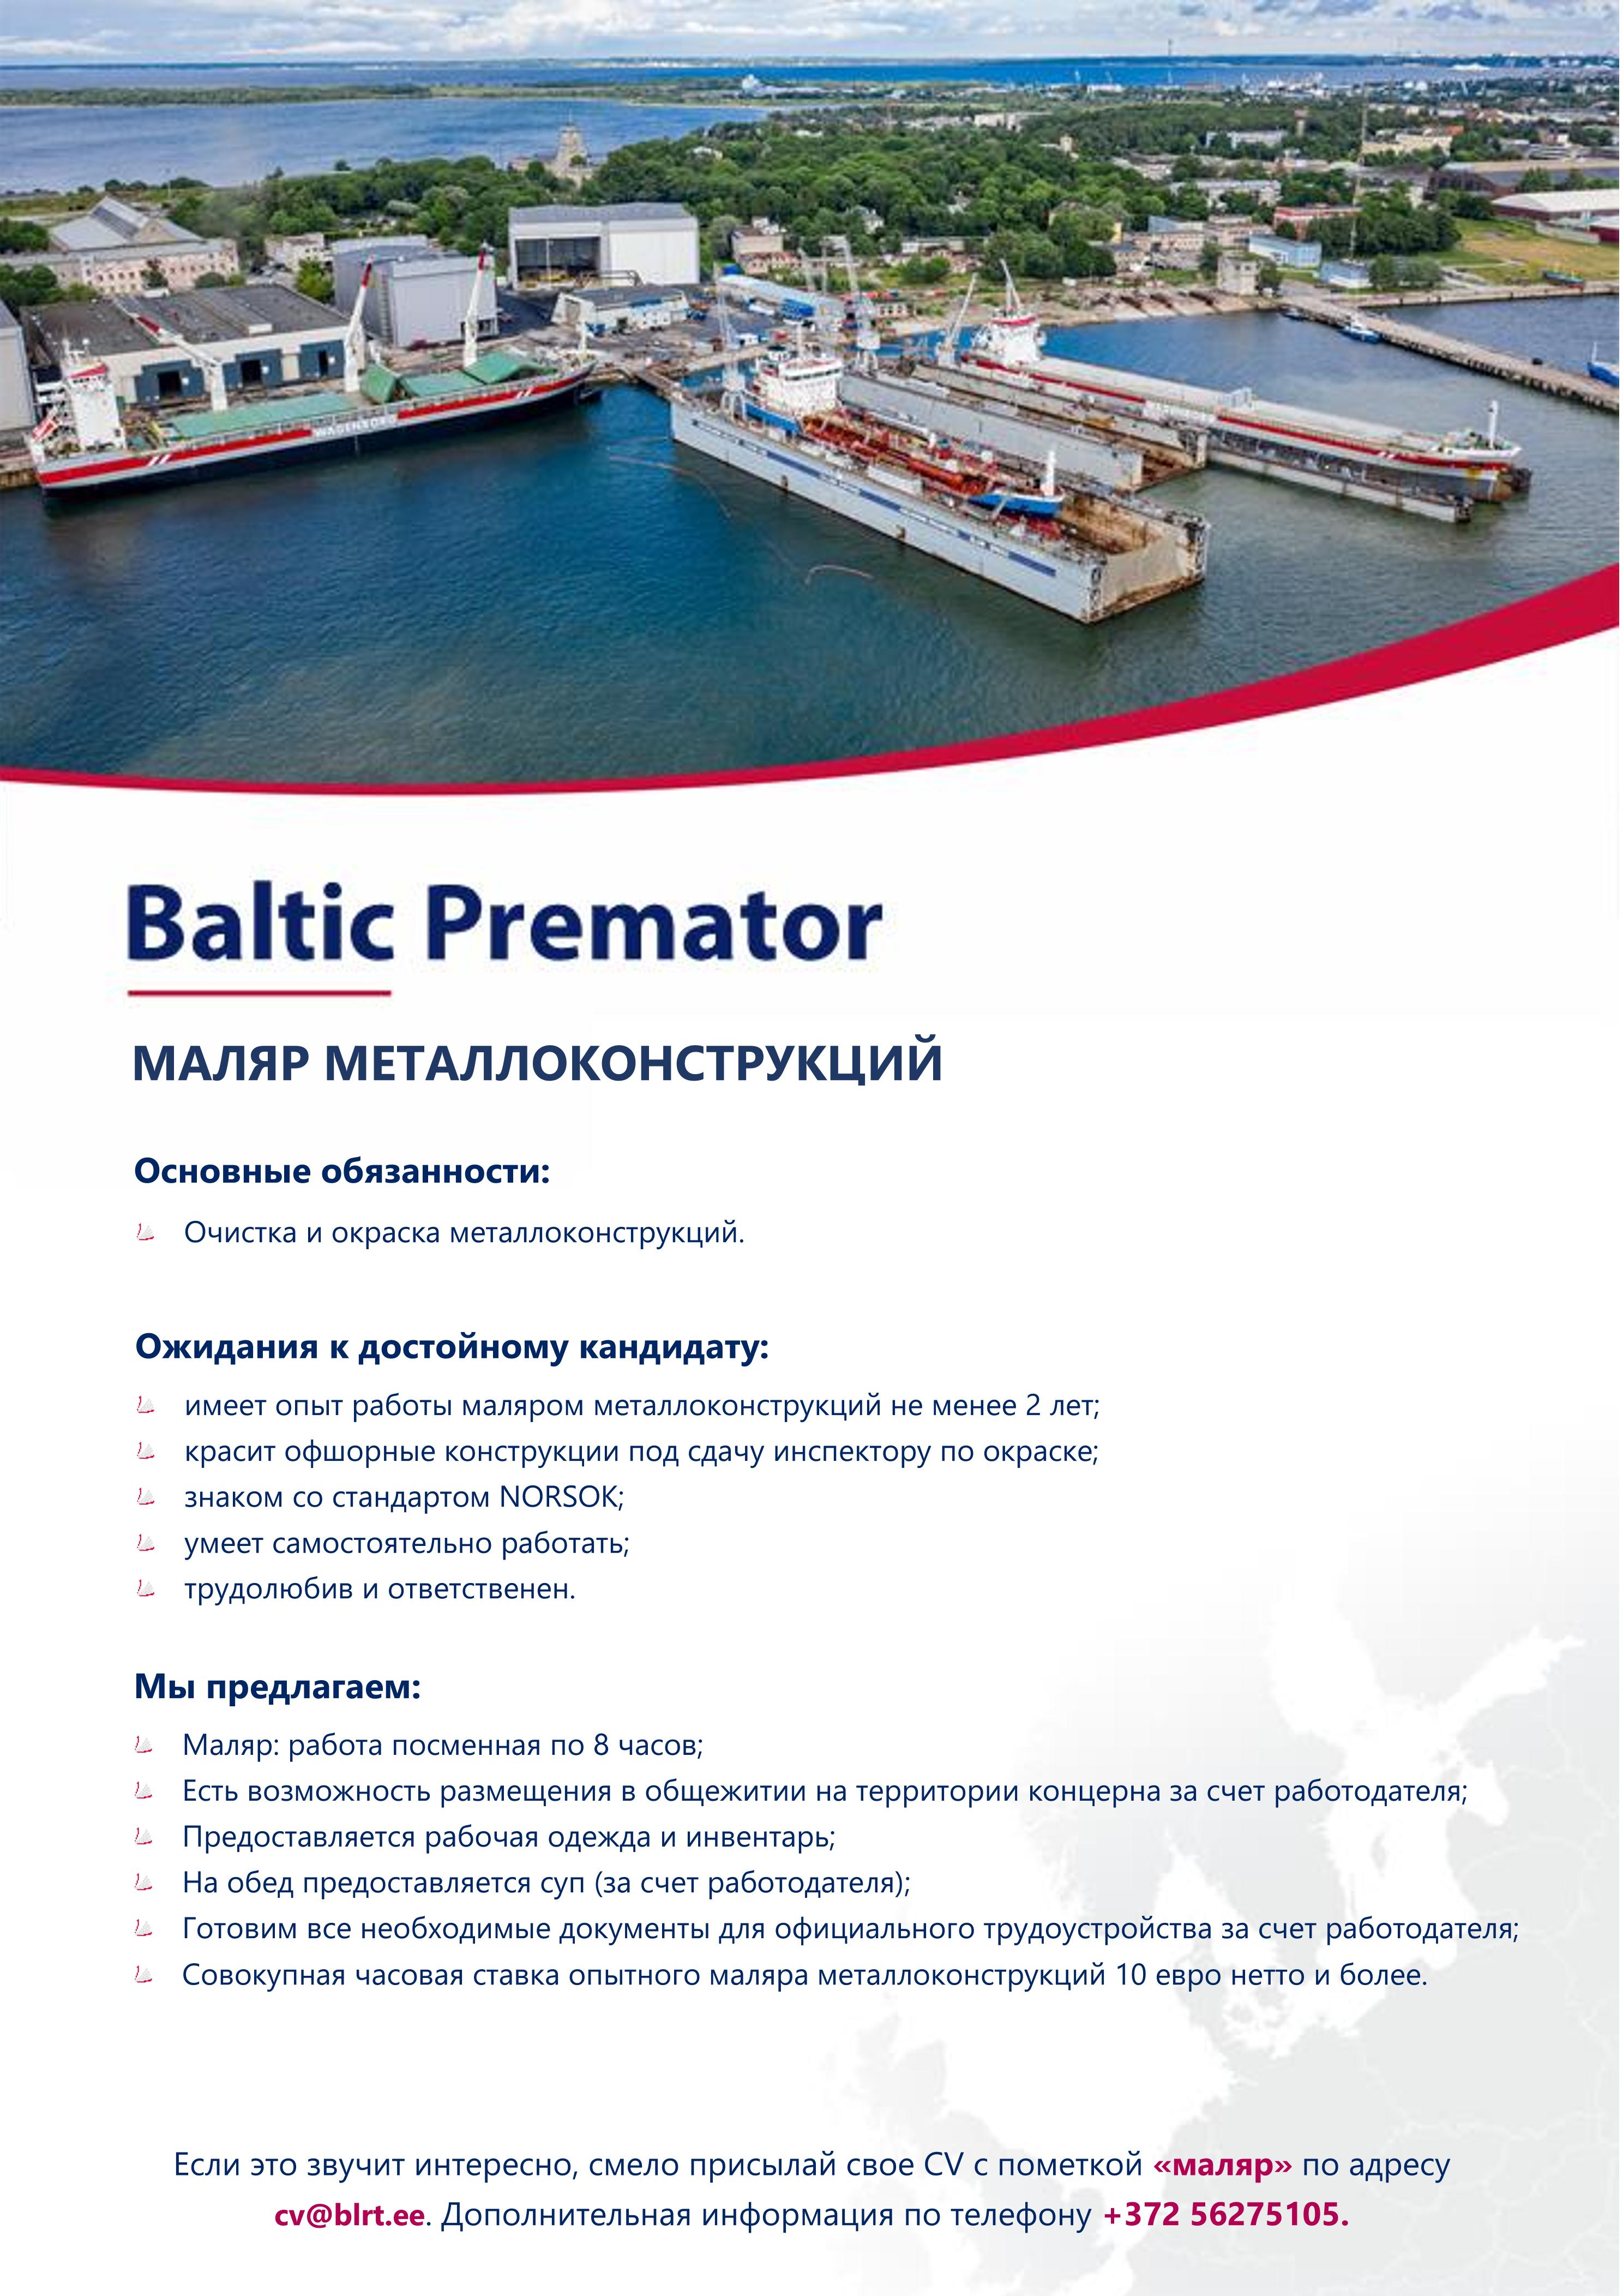 Baltic Premator Маляр металлоконструкций